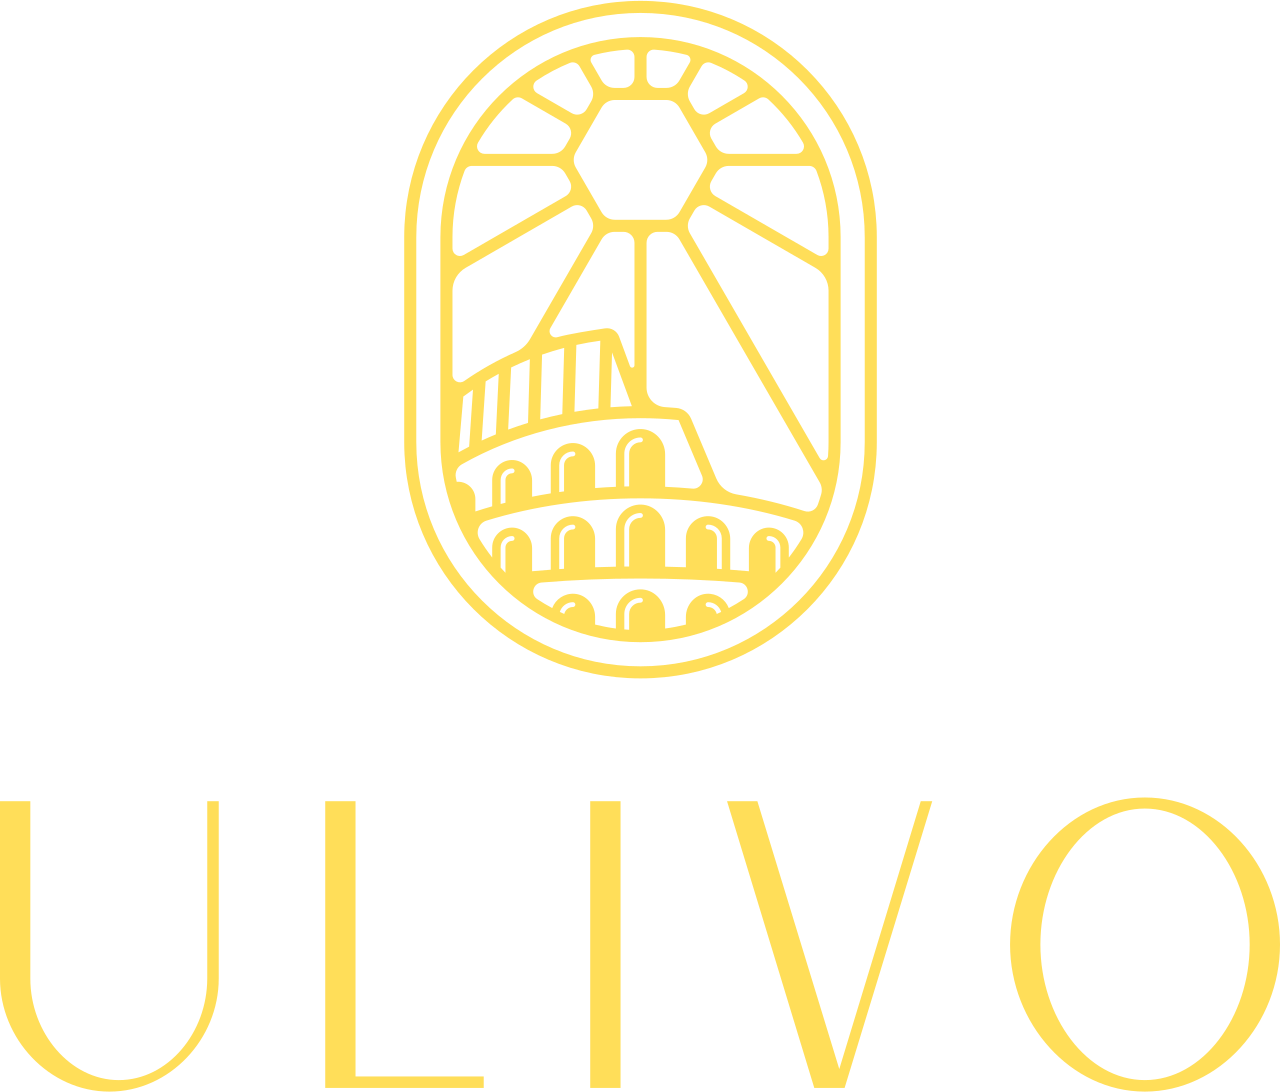 ULIVO's logo